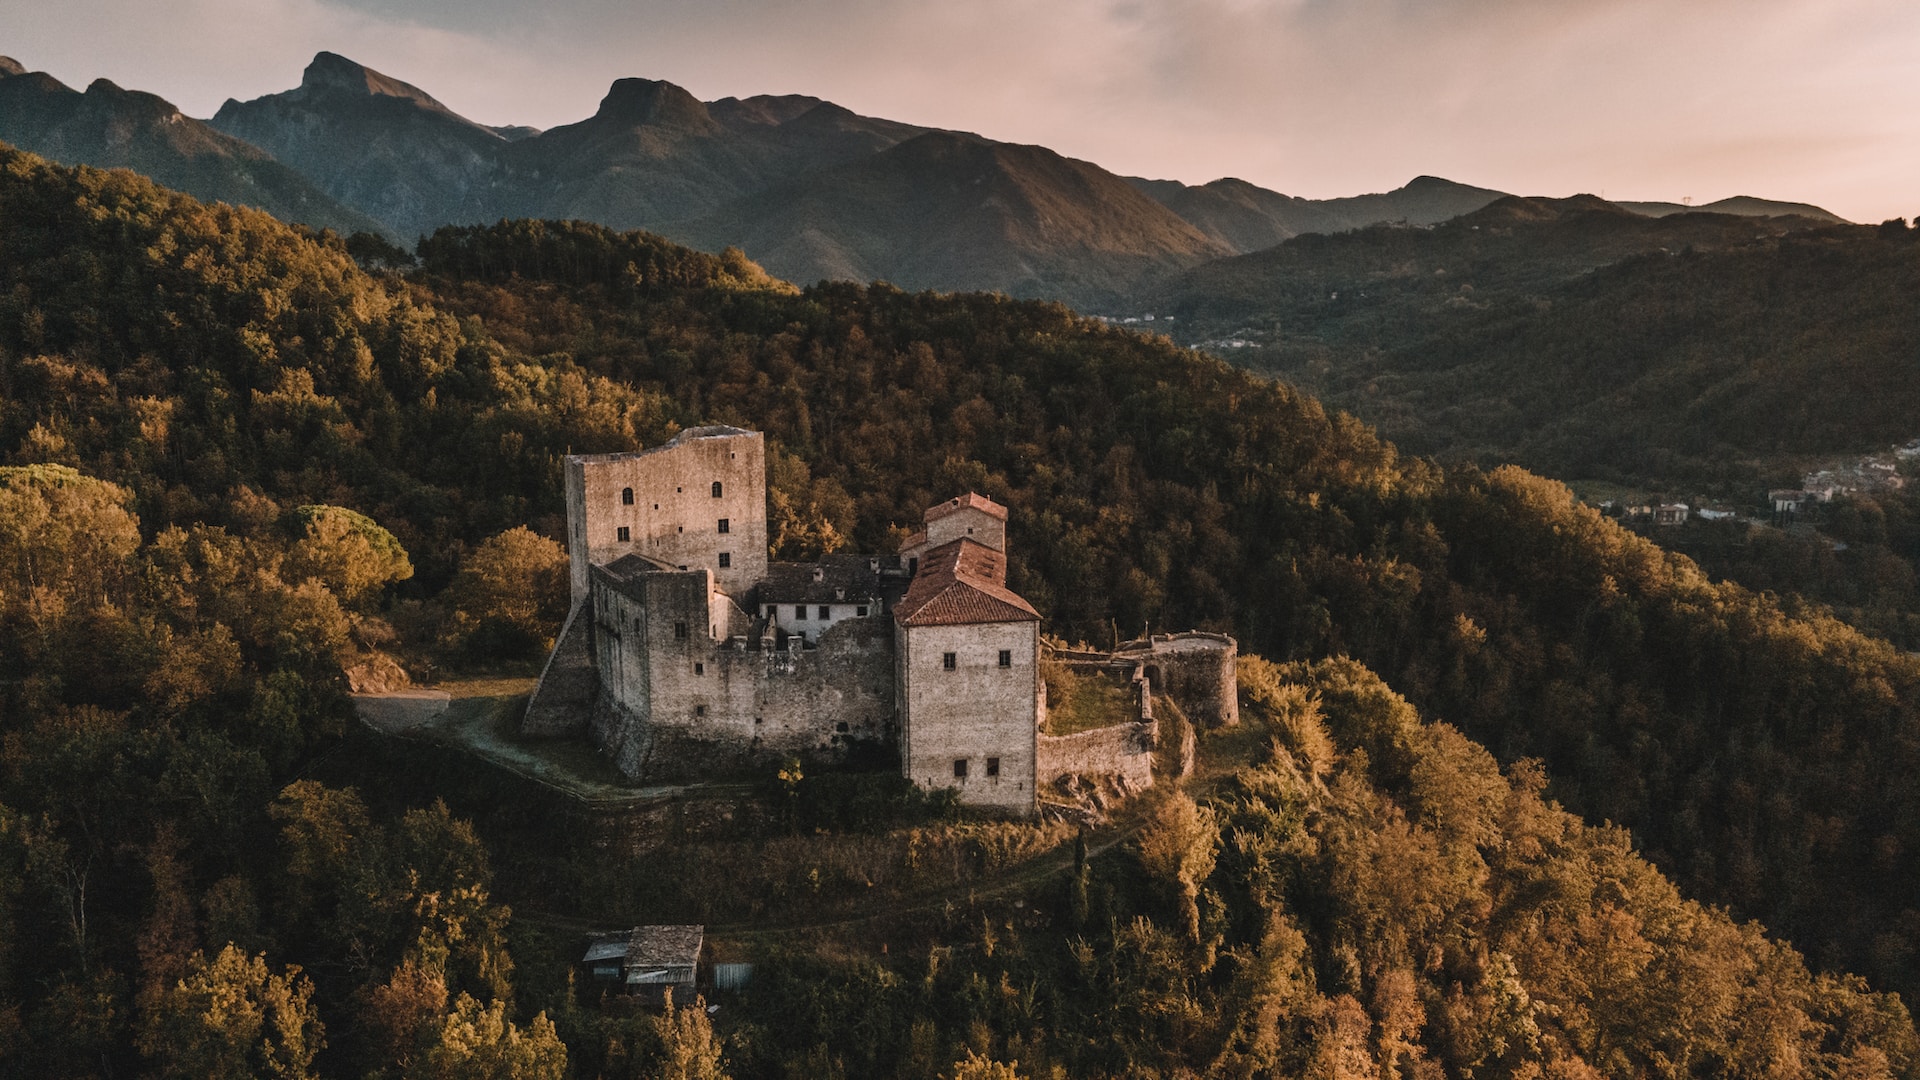 Lunigiana: land of the one hundred castles - Lunigiana, Italy | SeektoExplore.com